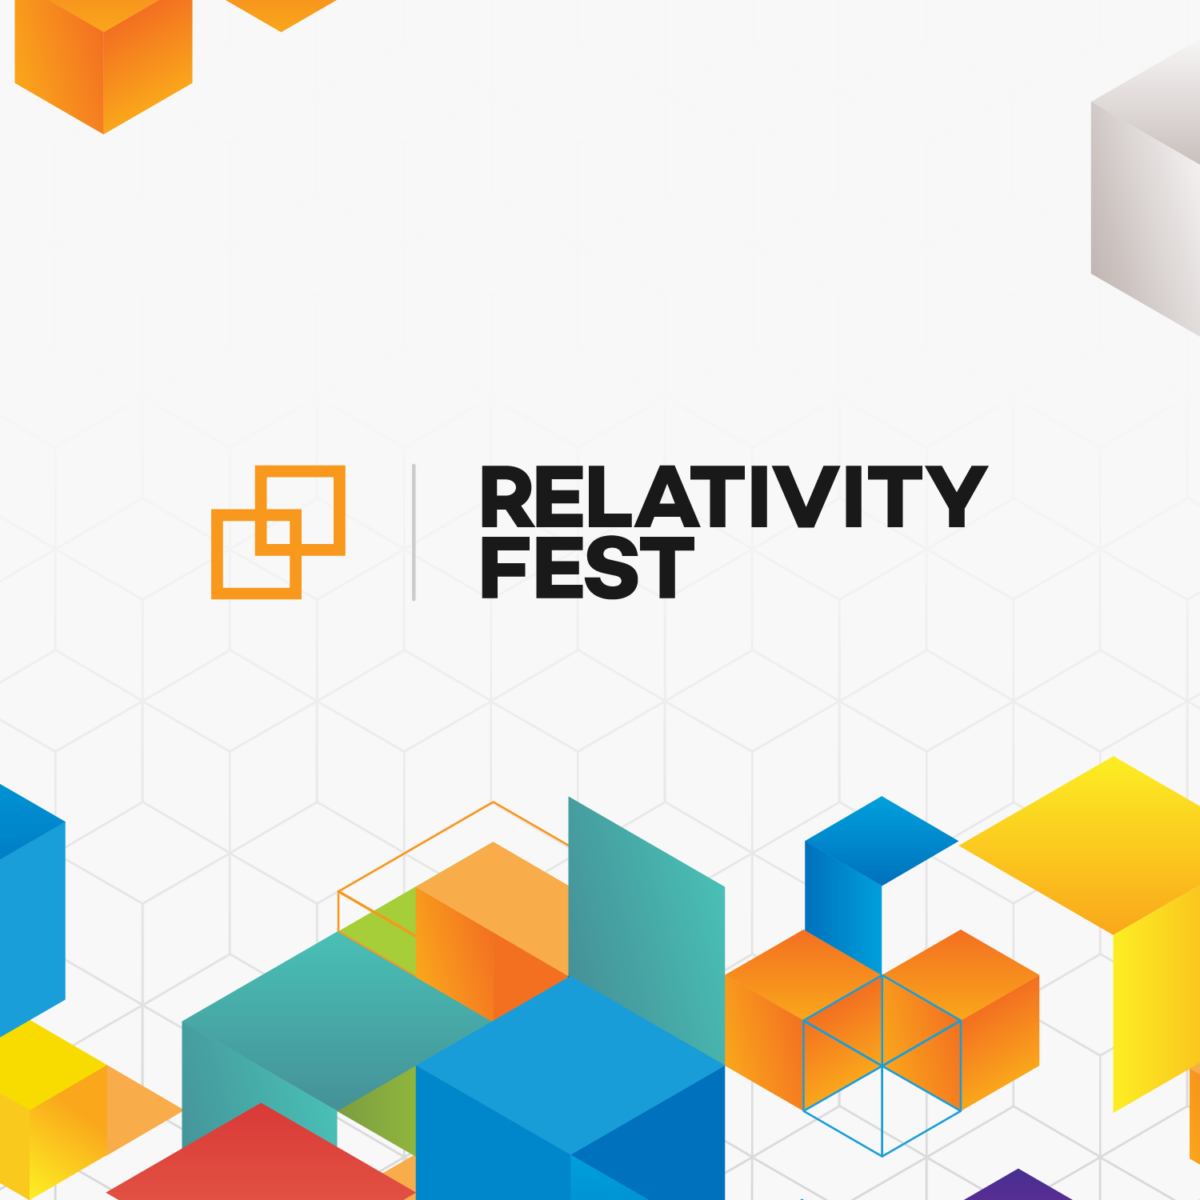 Relativity Fest